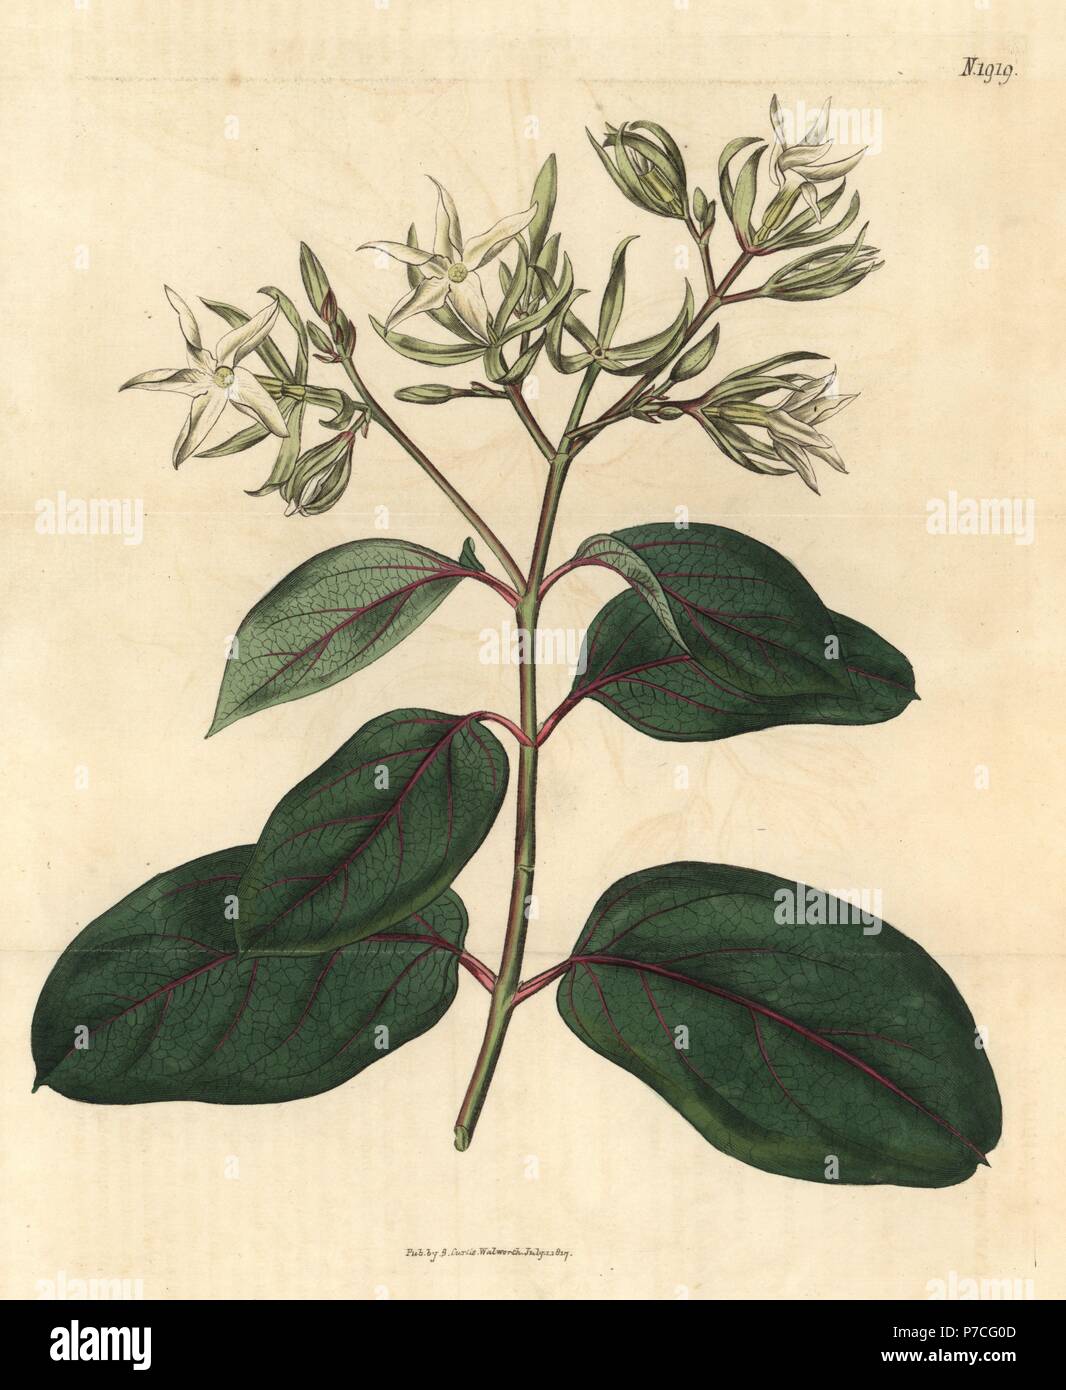 Kamettia caryophyllata (Clove-scented echites, Echites caryophyllata). Handcoloured botanical engraving from John Sims' Curtis's Botanical Magazine, Couchman, London, 1817. Stock Photo